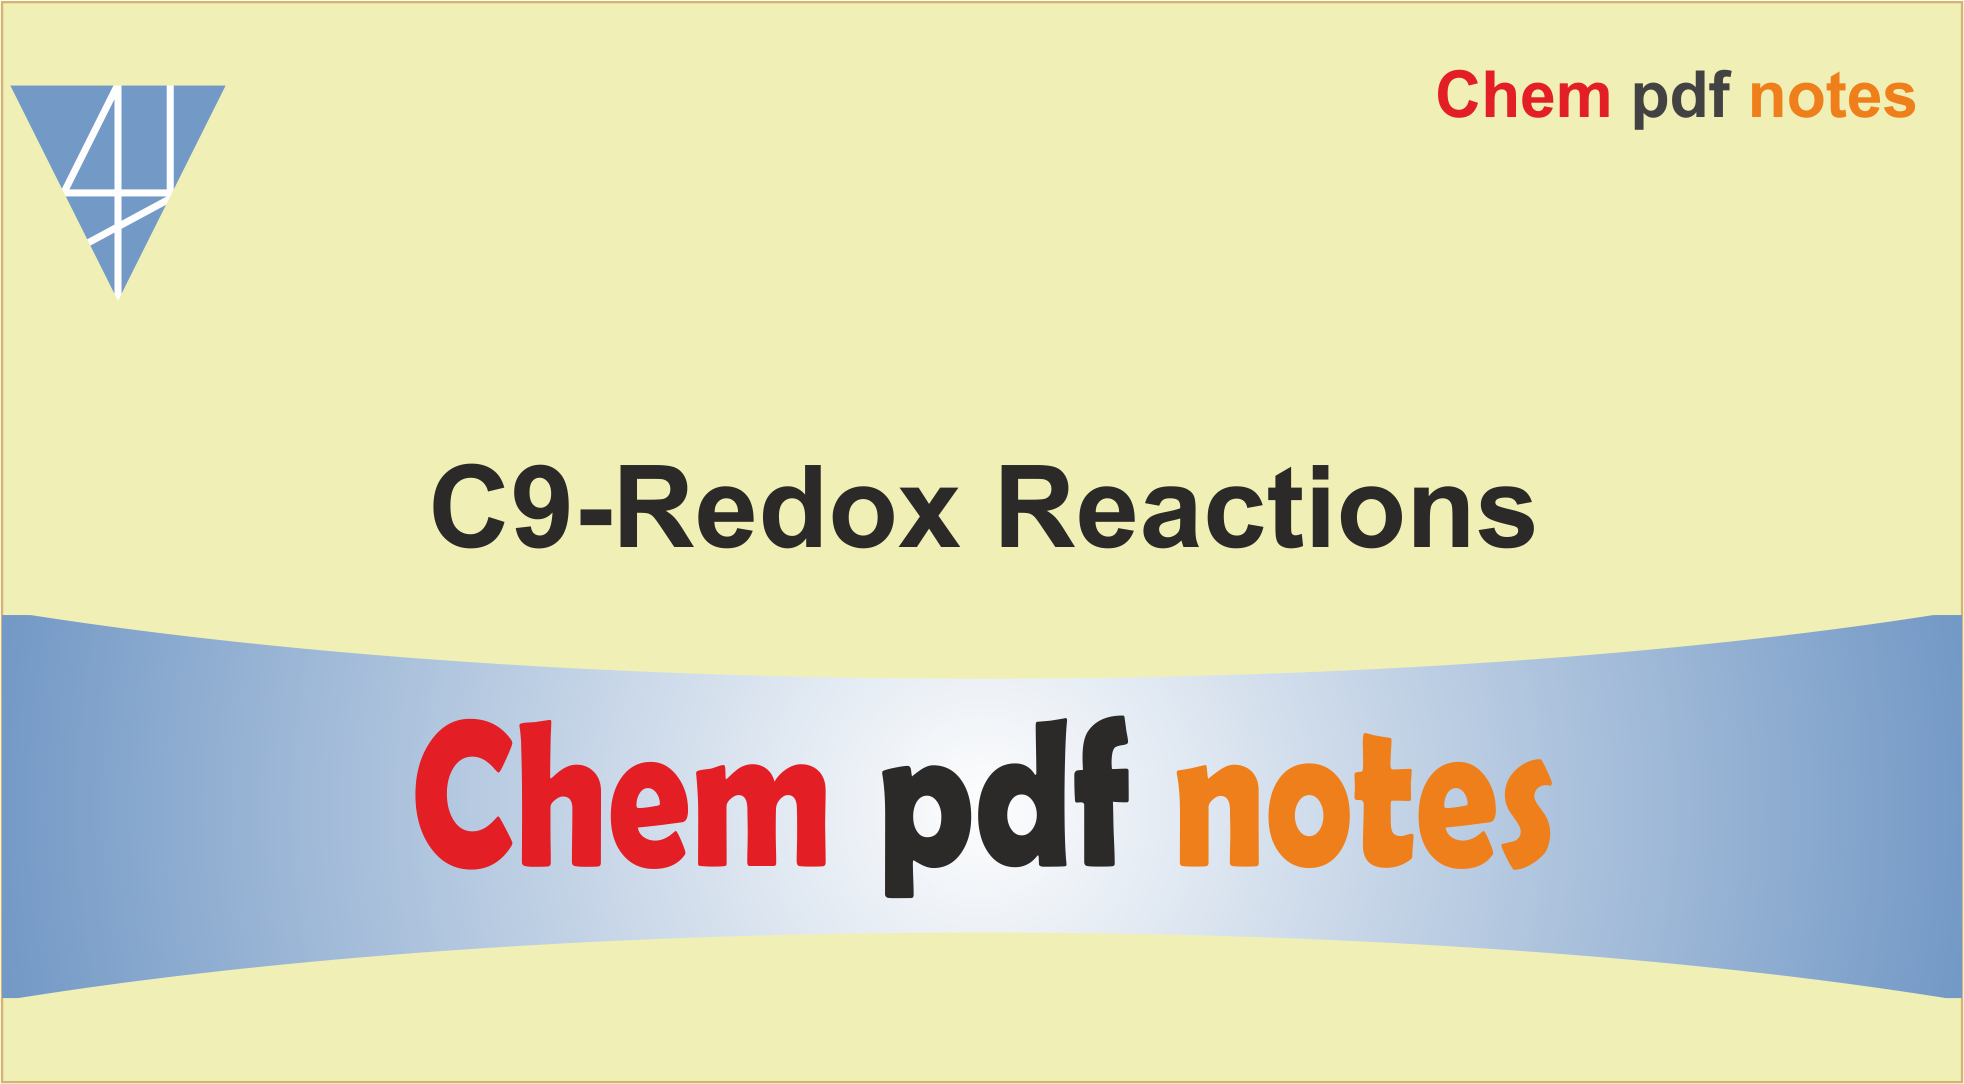 C9-Redox Reactions